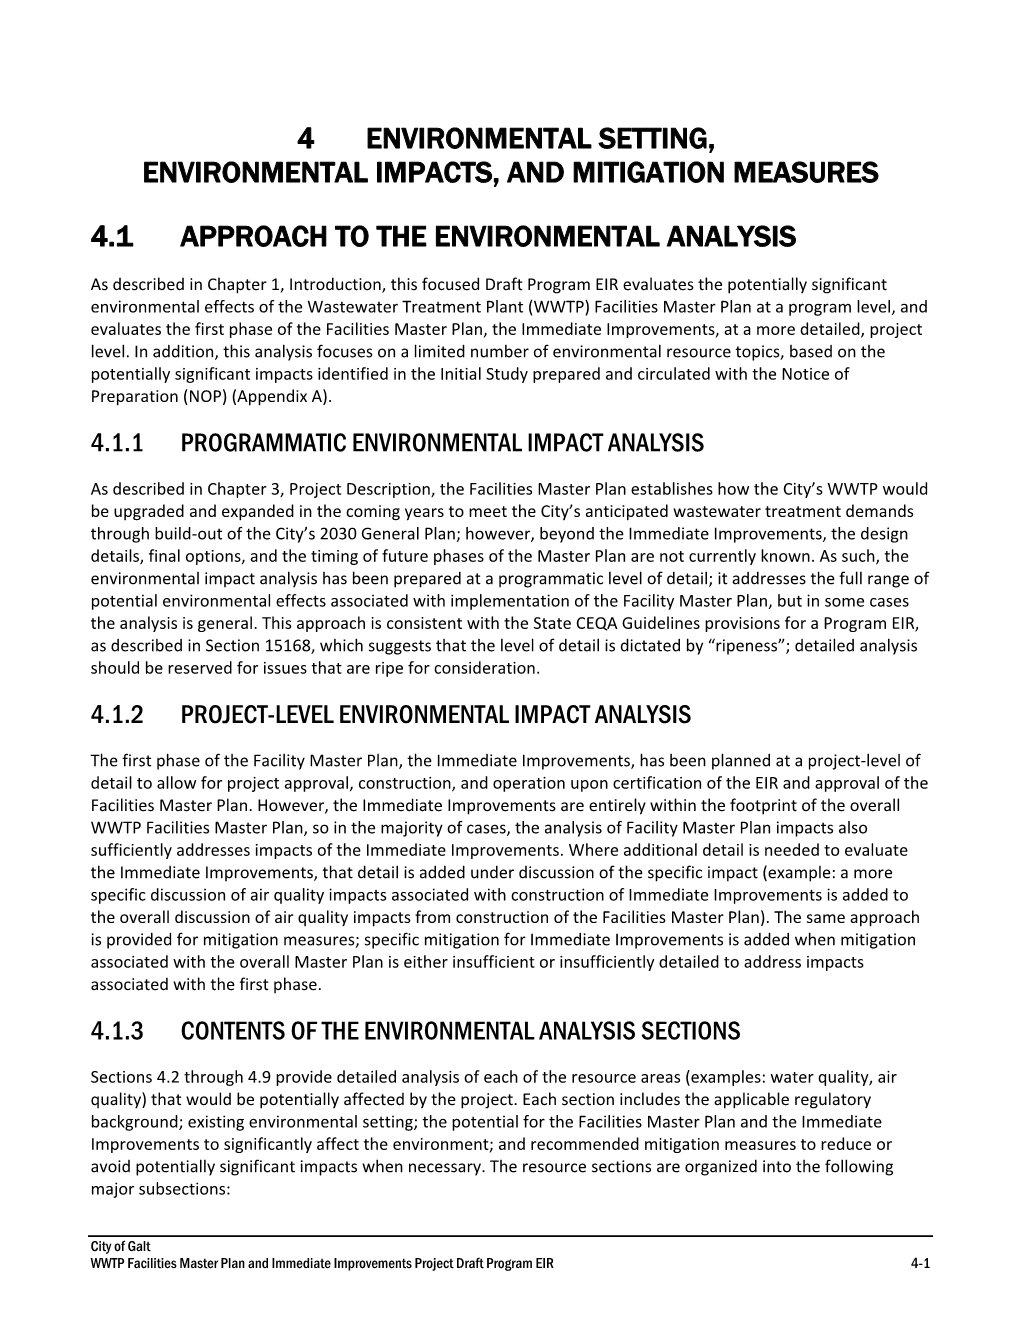 Environmental Setting, Environmental Impacts, and Mitigation Measures